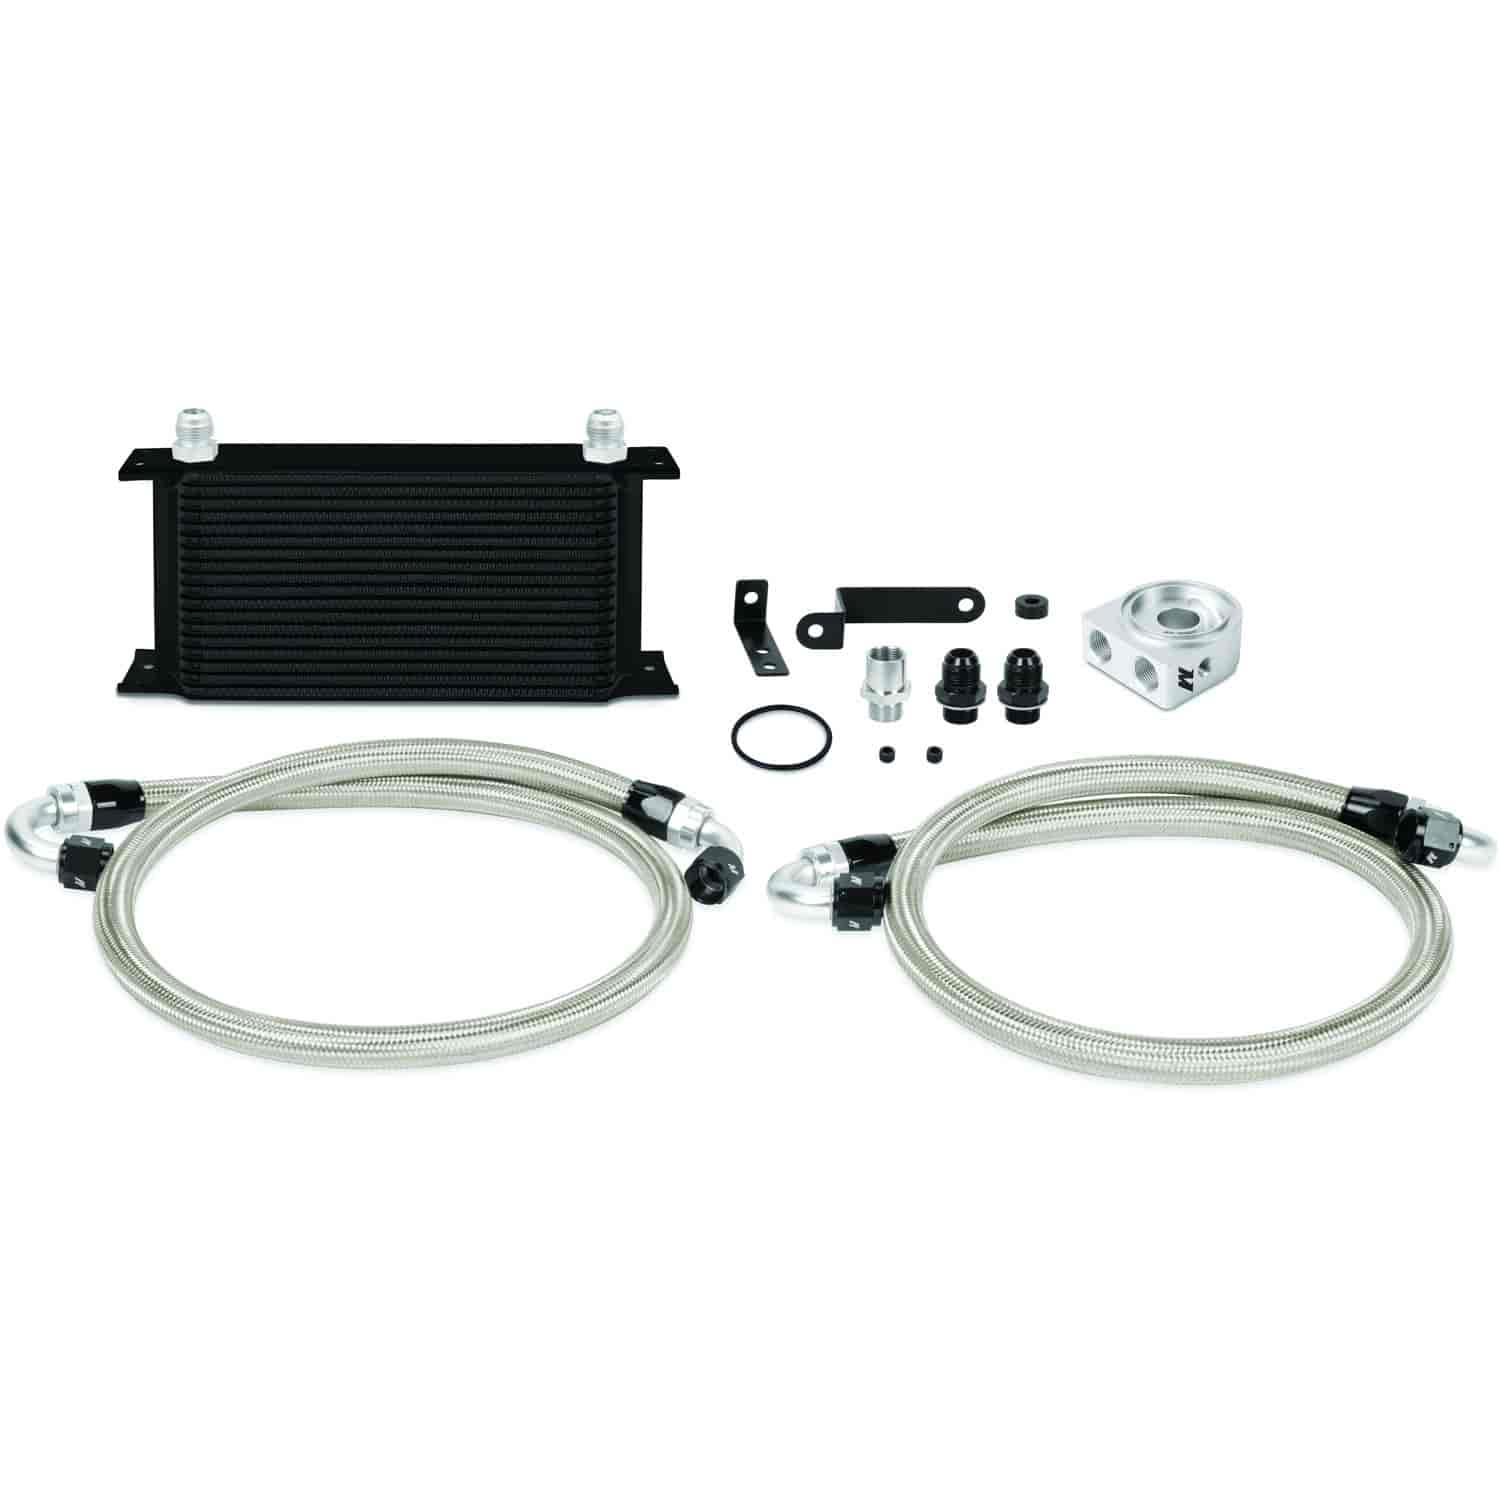 Subaru WRX STI Oil Cooler Kit Black - MFG Part No. MMOC-STI-08BK